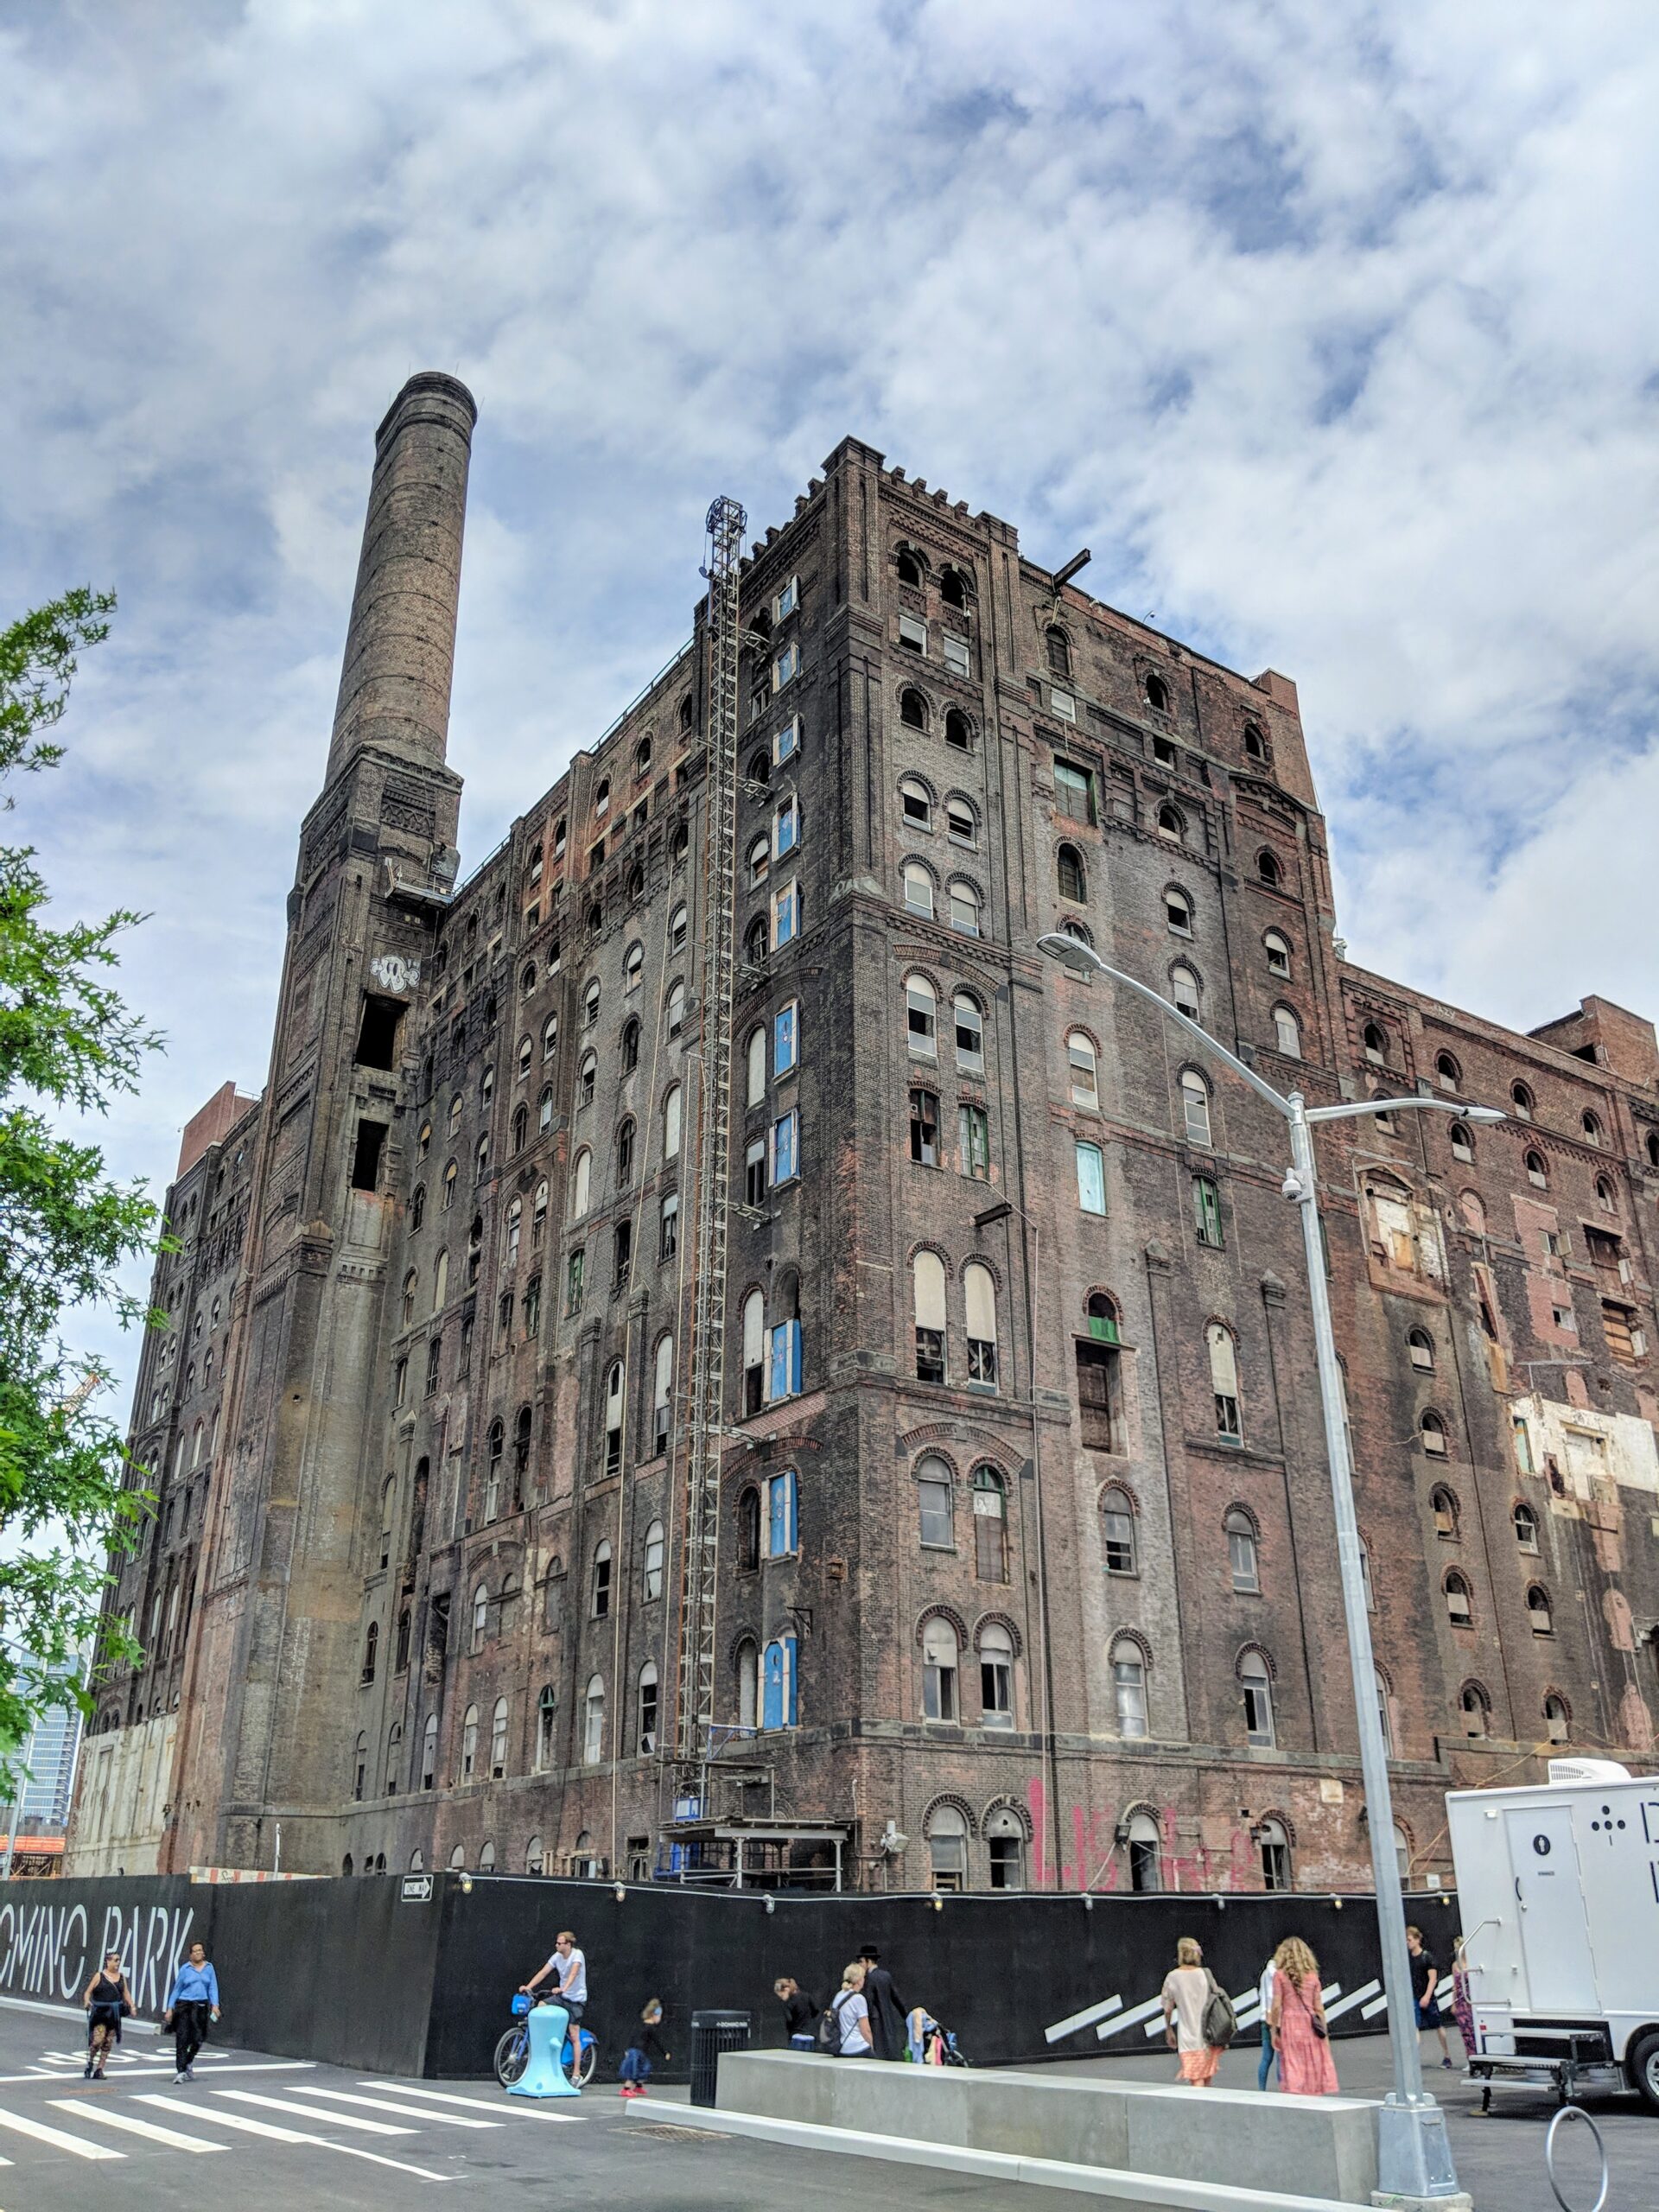 domino sugar factory building looks unused